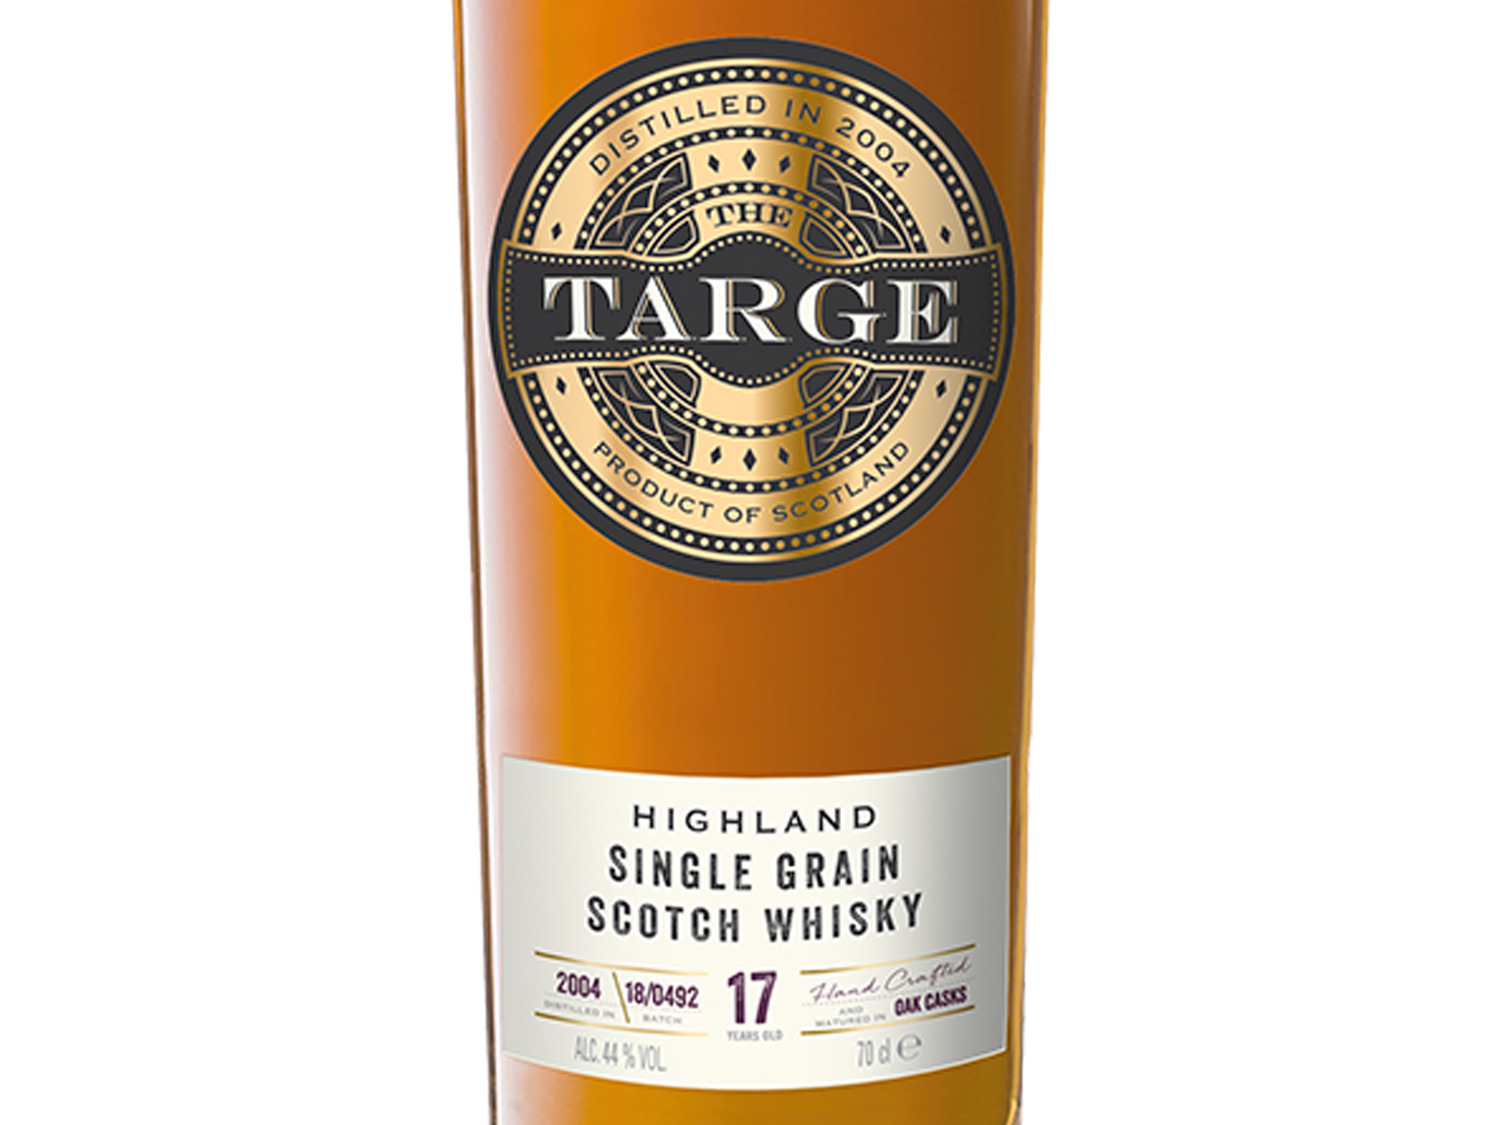 Targe Single Scotch Whisky Grain 17 The Jahre… Highland